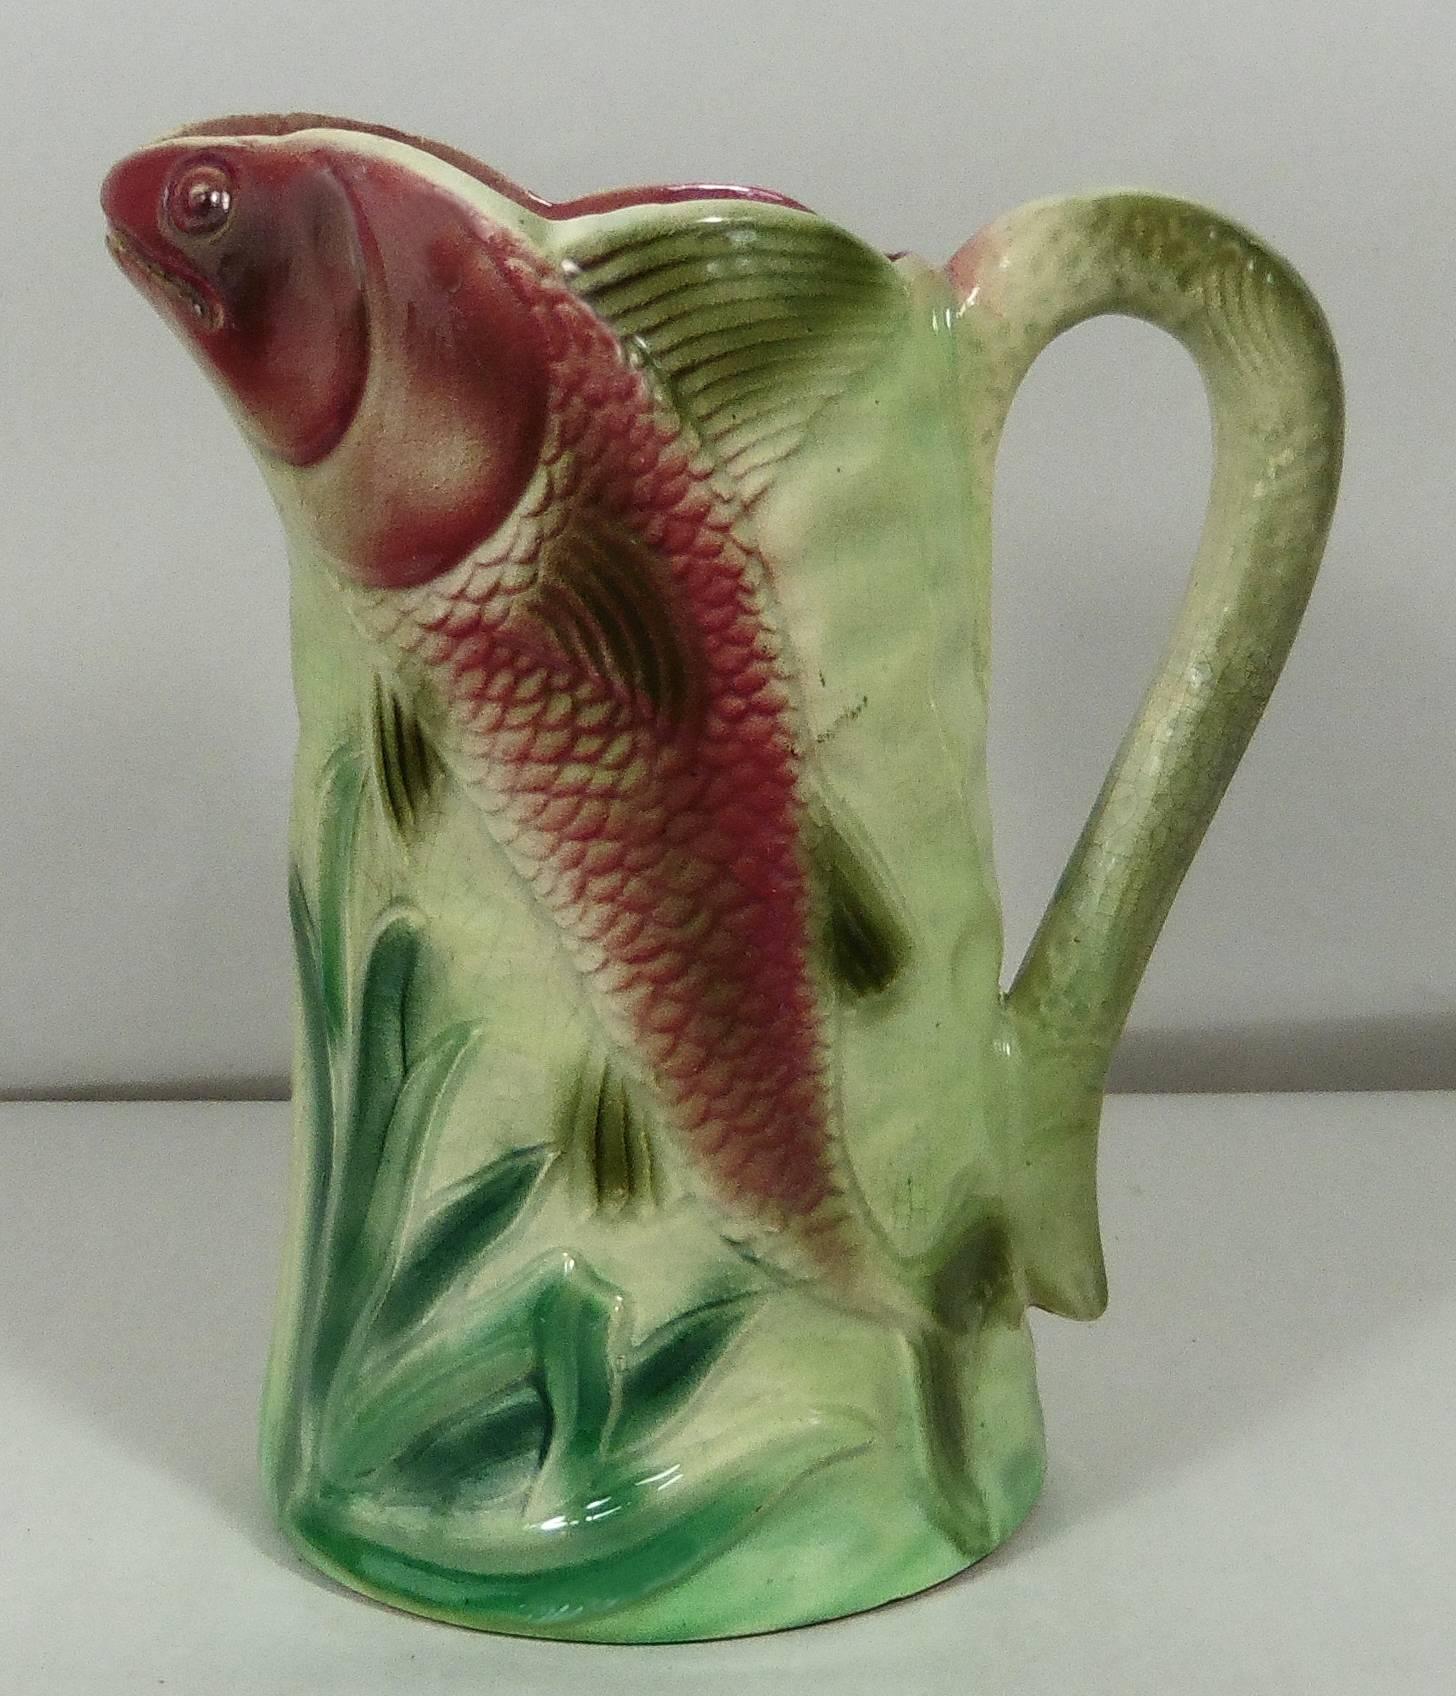 French Majolica pitcher with large fish, aquatic plants, fish handle, circa 1920.